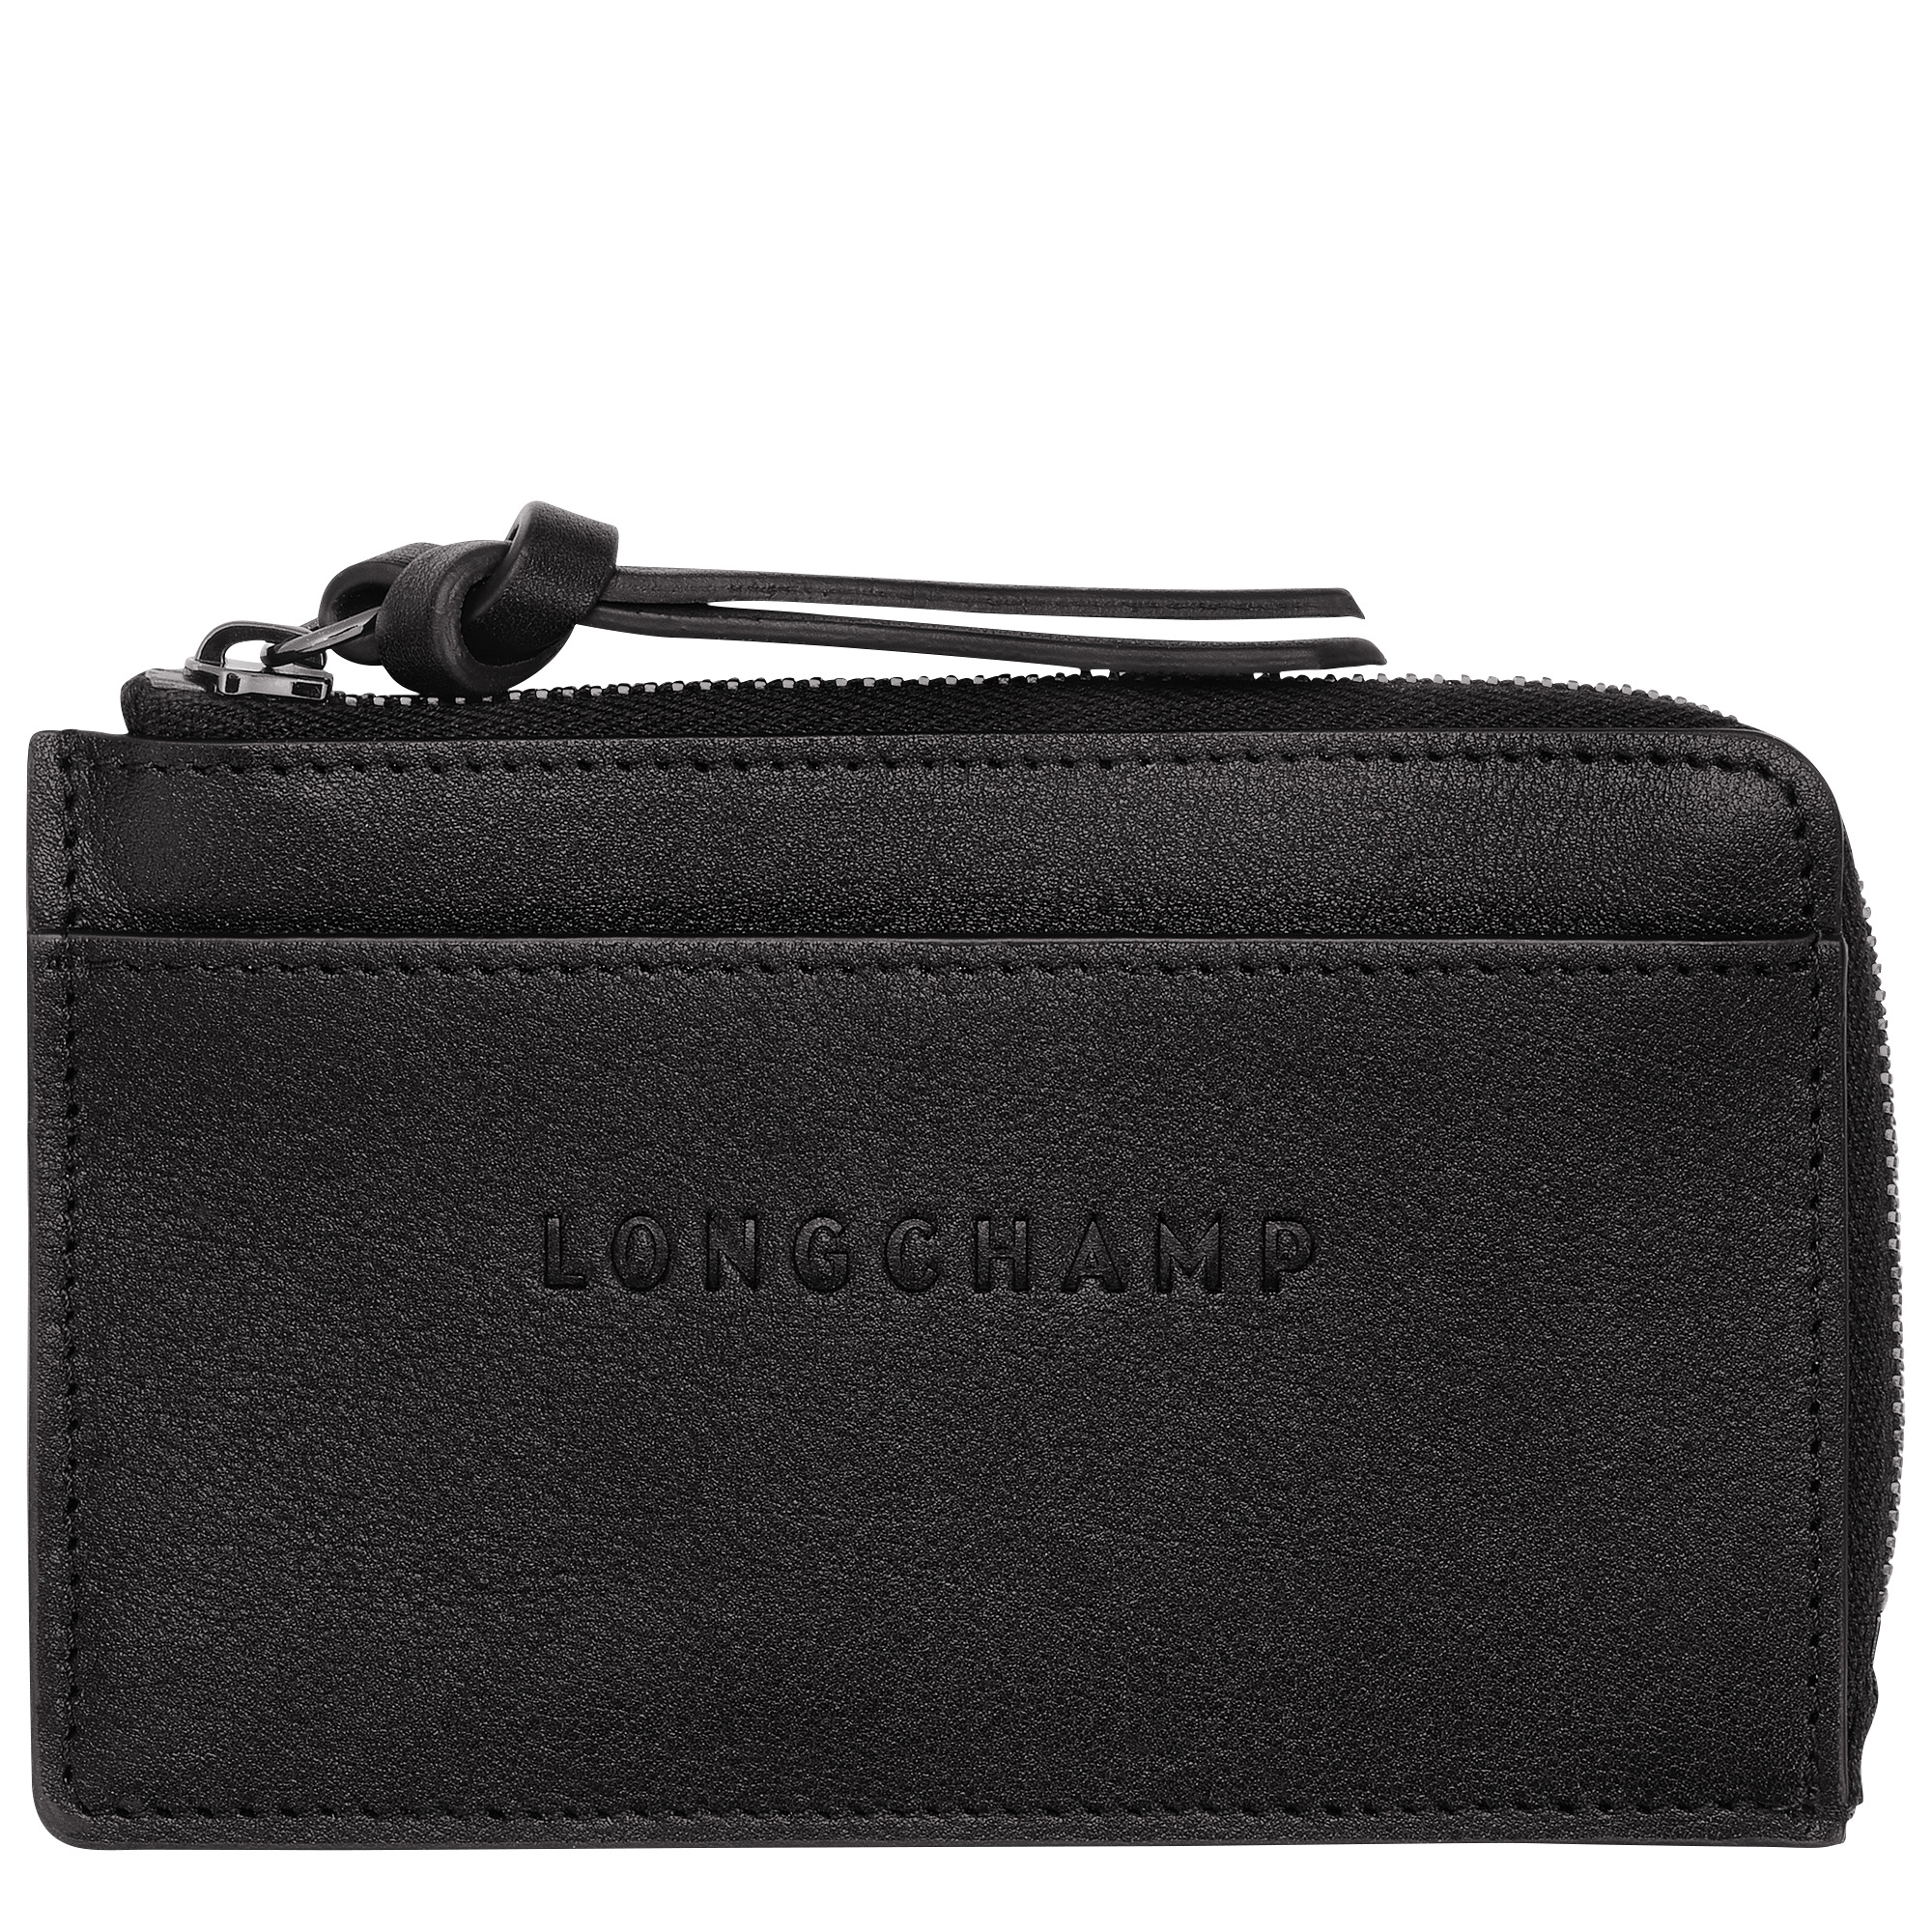 Longchamp 3D Card holder Black - Leather - 1